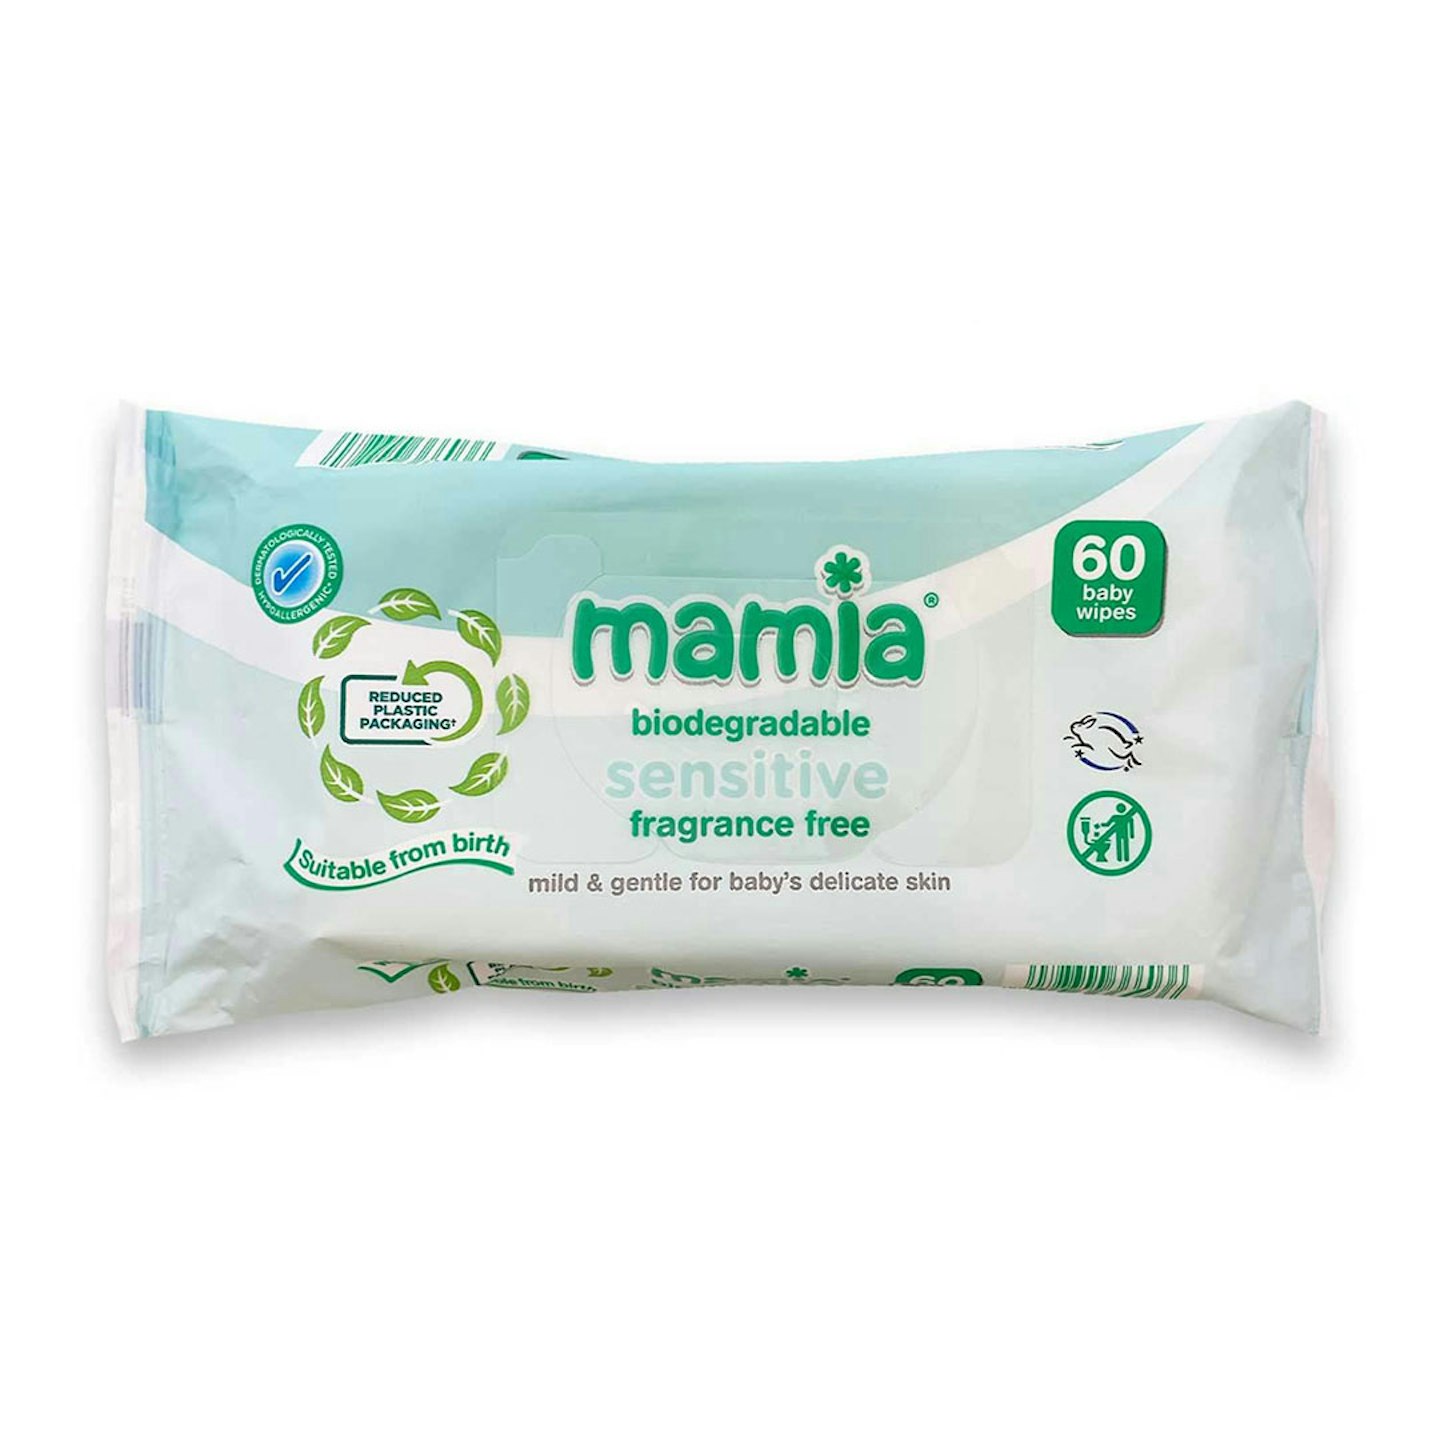 Mamia Aldi Biodegradable wipes review